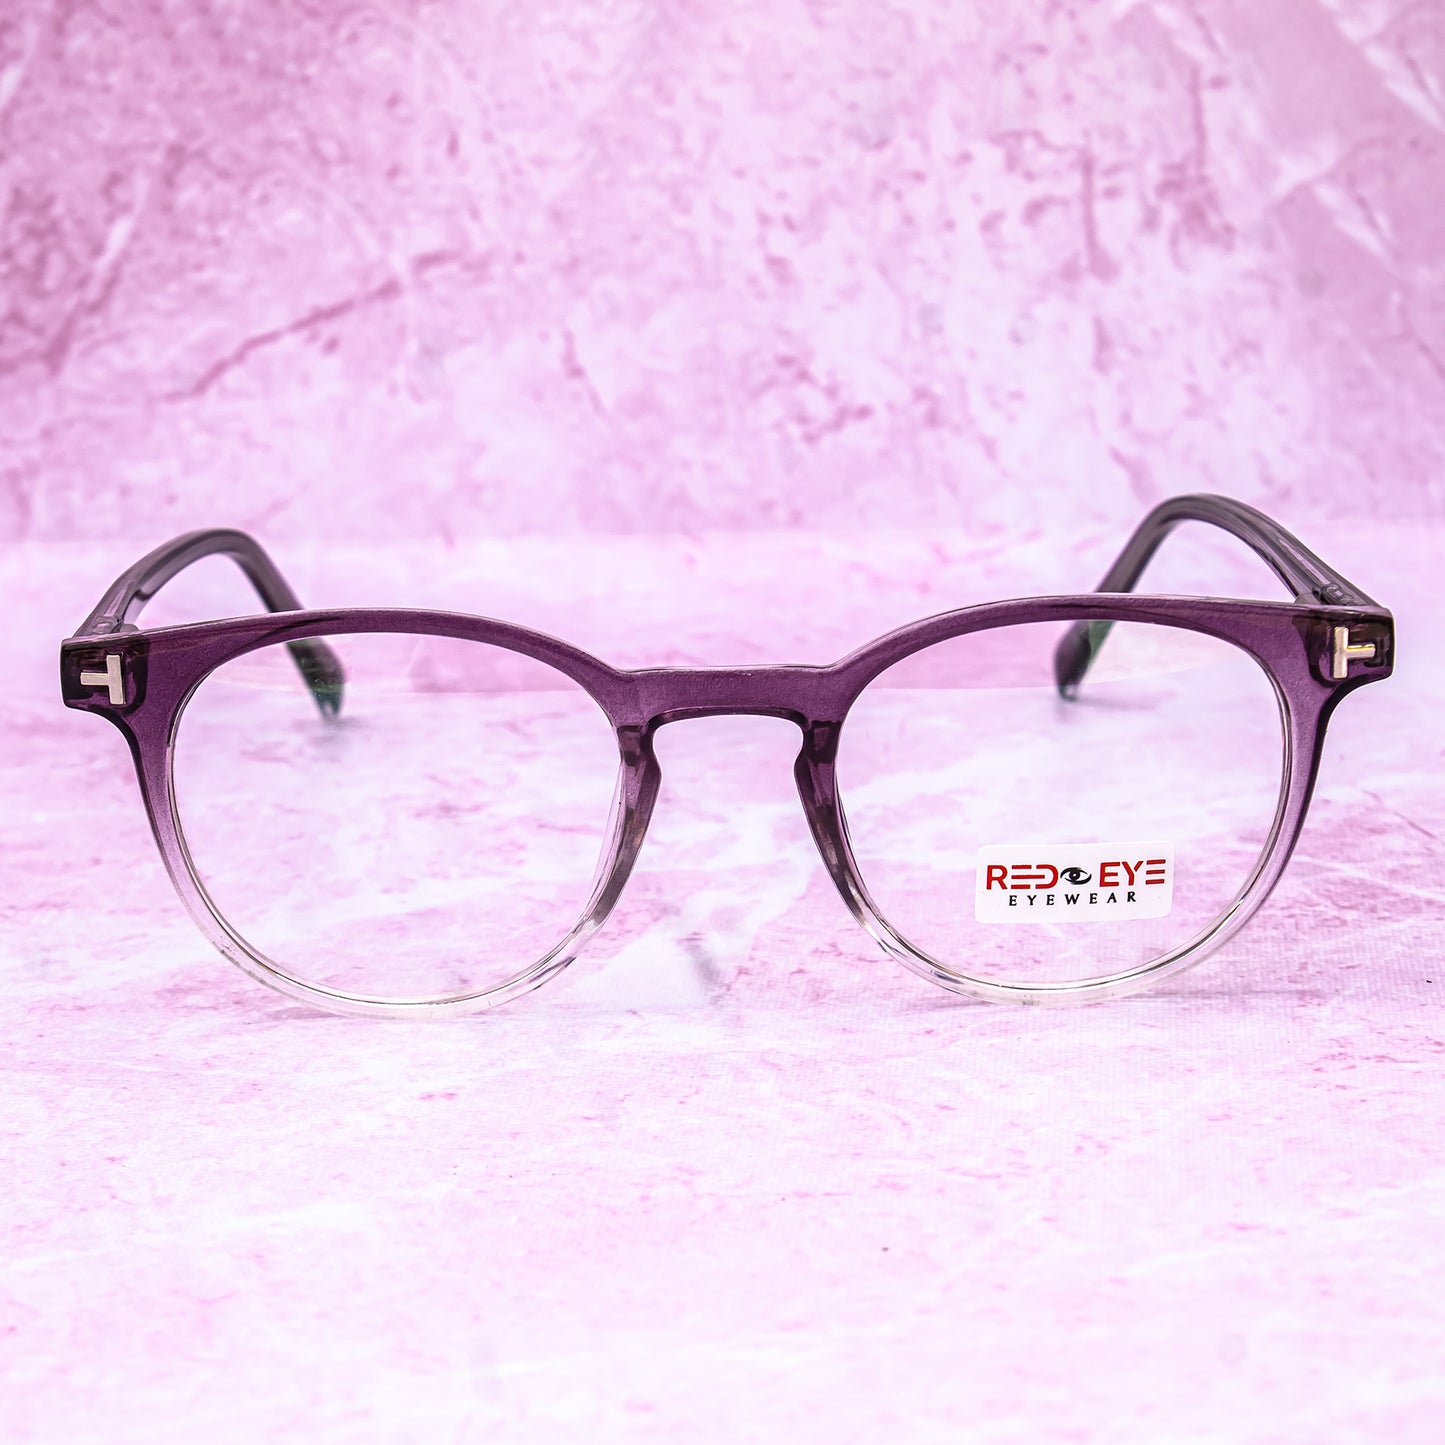 Jiebo Pink Rimmed Eyeglasses for Women